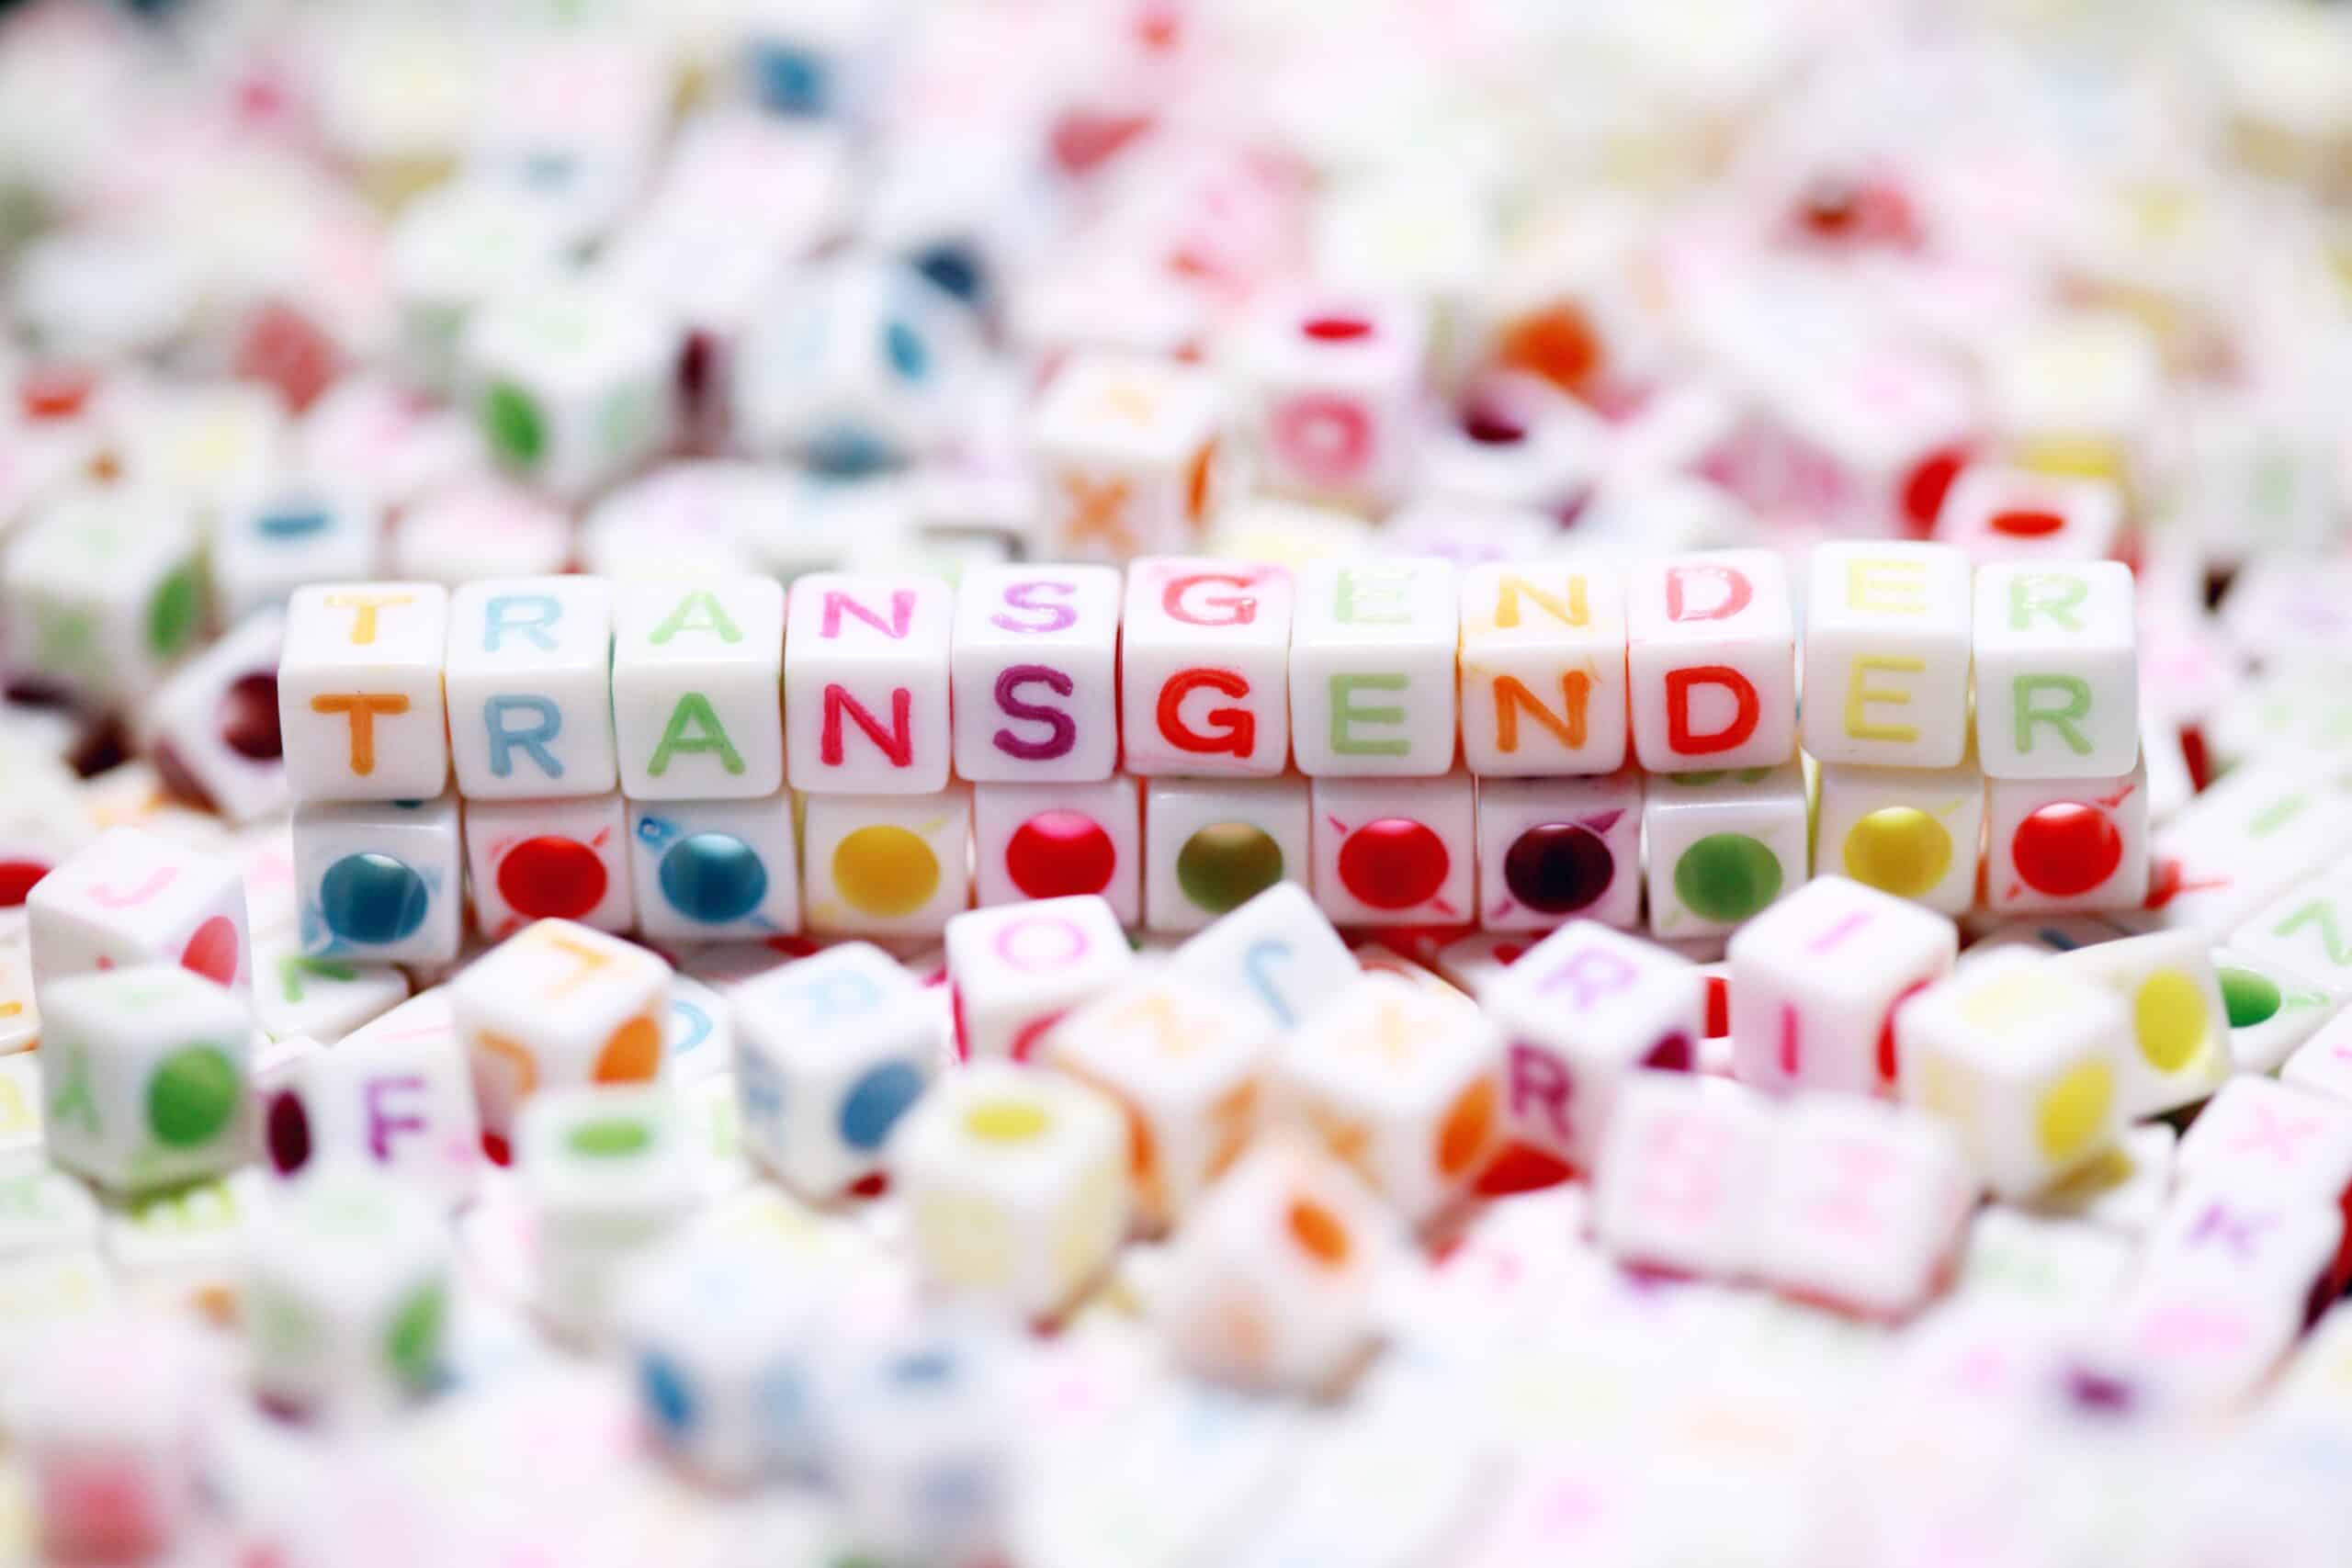 beads spelling out Transgender